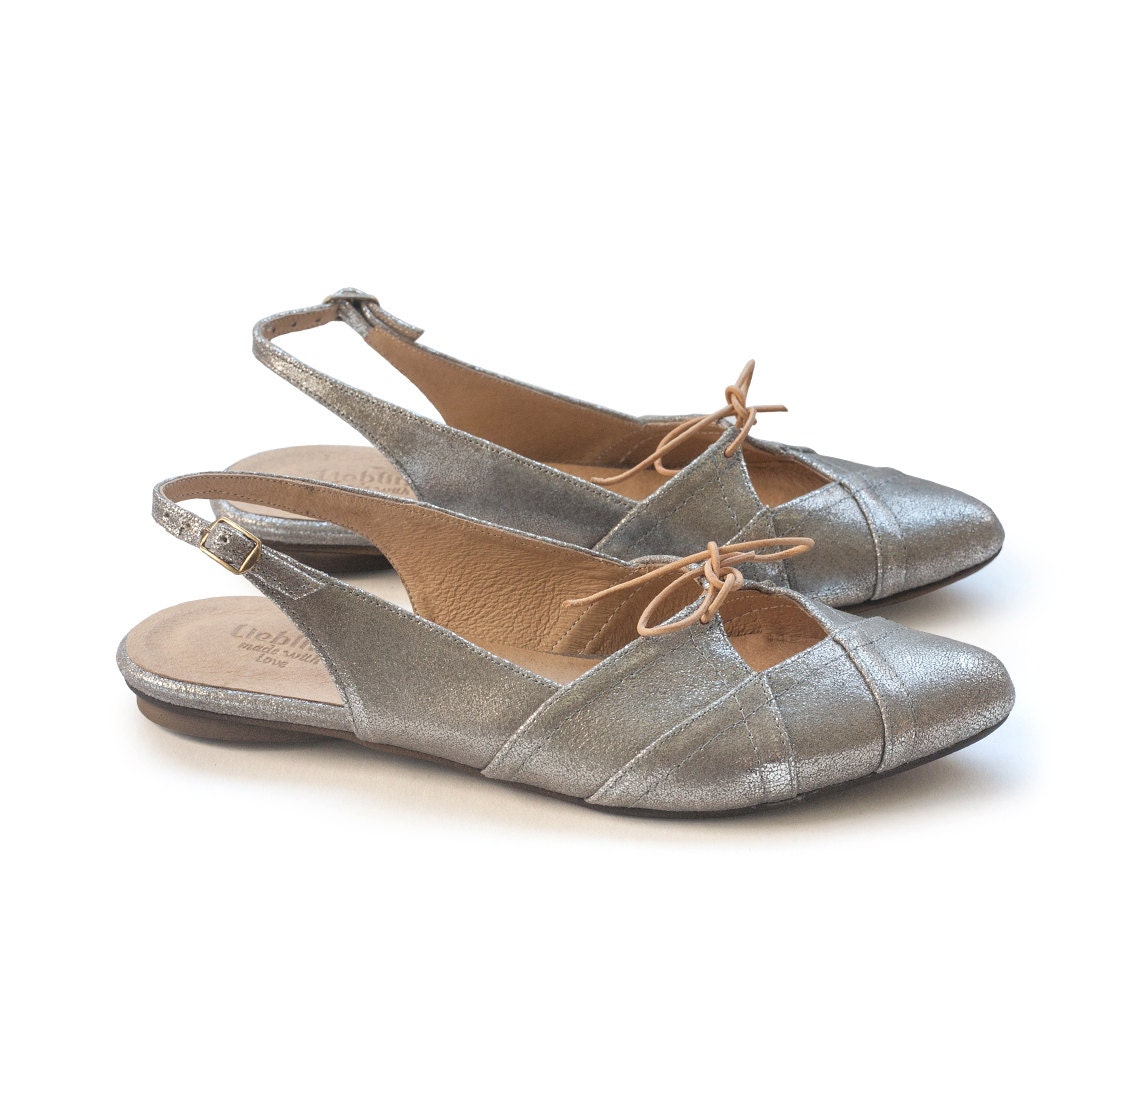 Sale 42% off Silver flats. Suki model. Women shoes leather